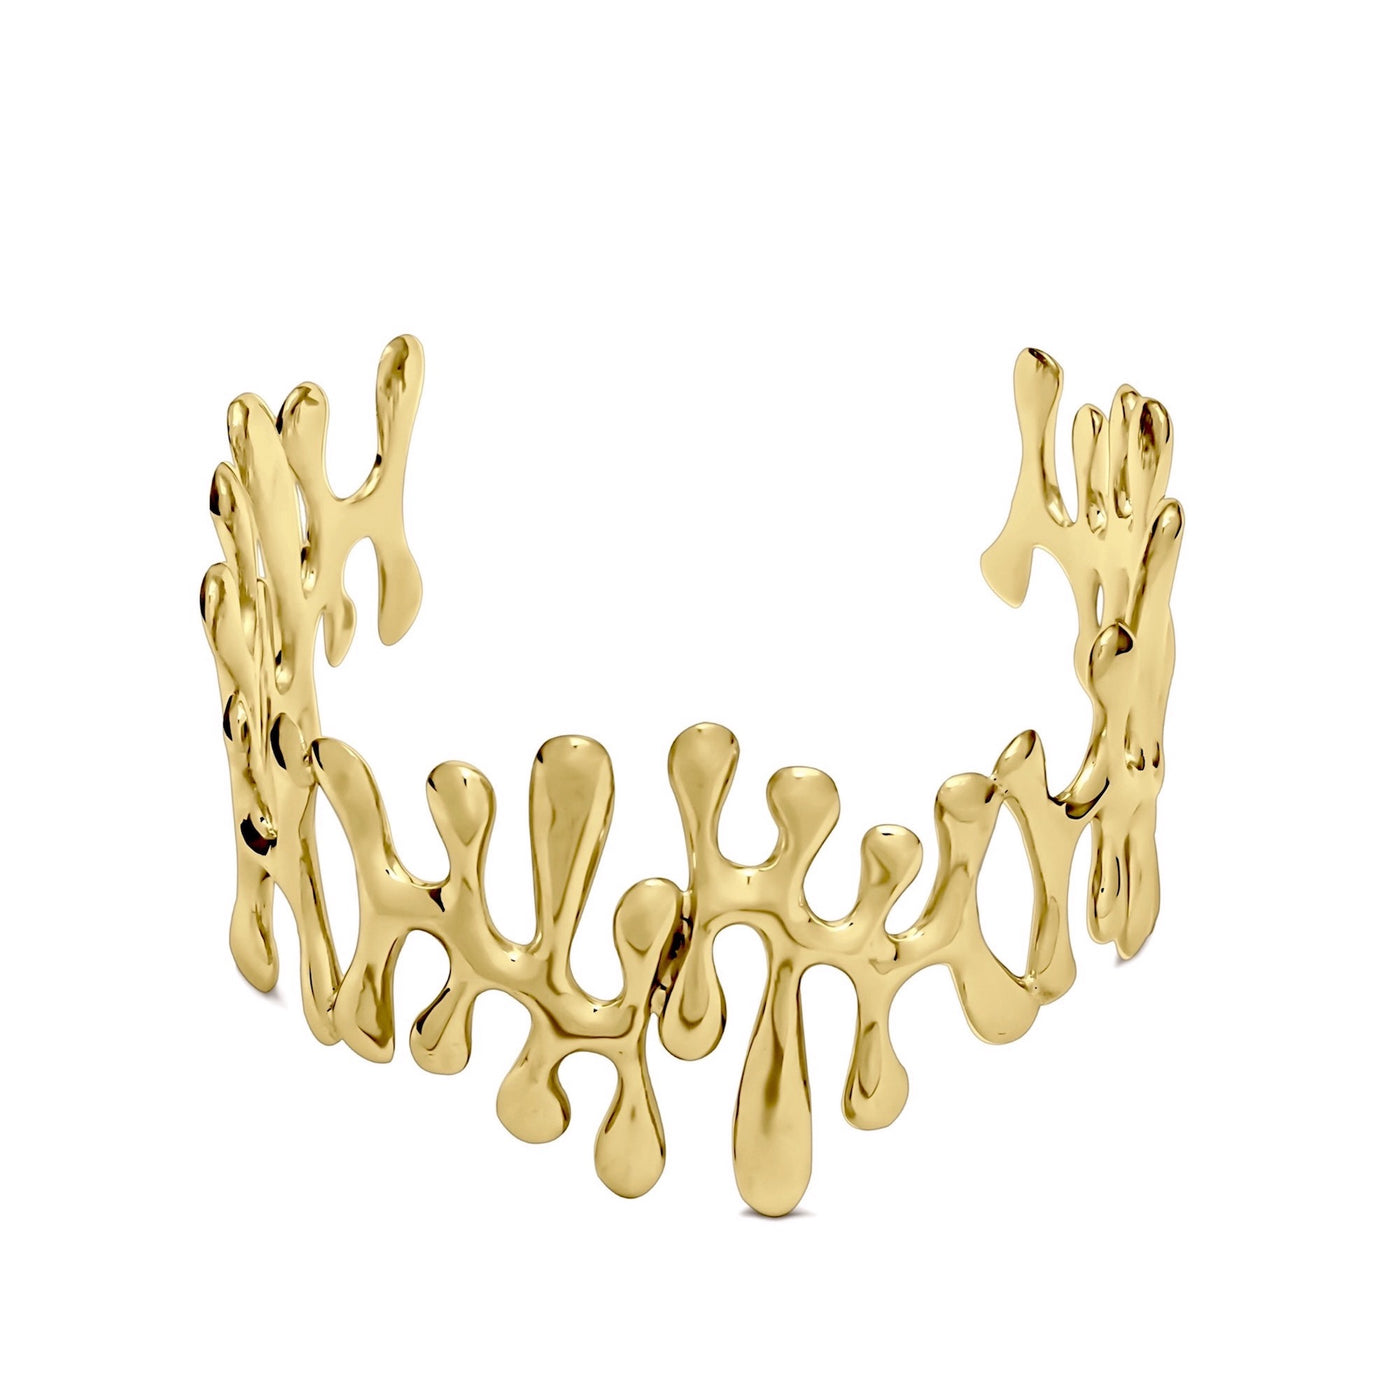 Gold statement cuff bracelet from Atelier ORMAN